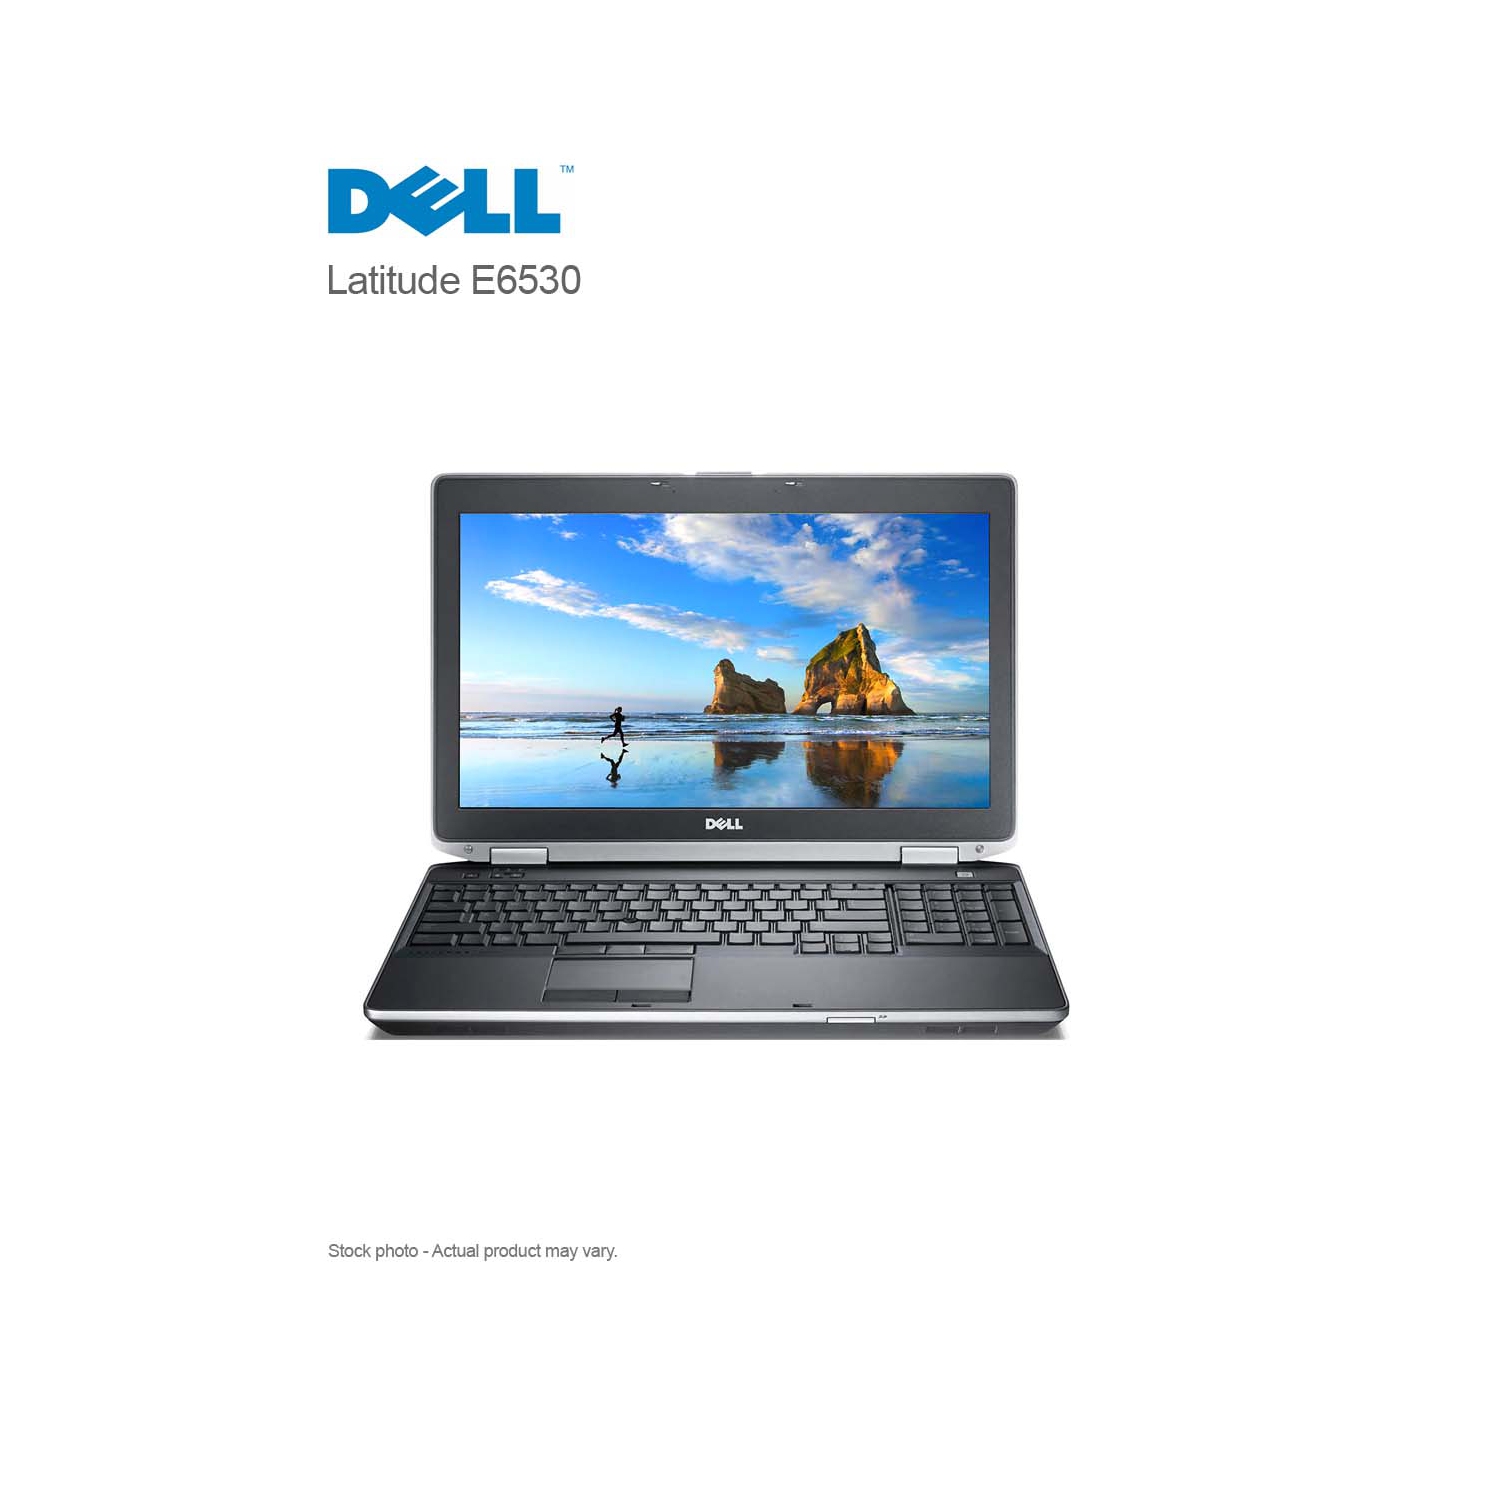 Refurbished (Good) - Dell Latitude E6530 15.6" Laptop - (Intel i7-3720QM/240GB SSD/8GB RAM/Windows 10) - English